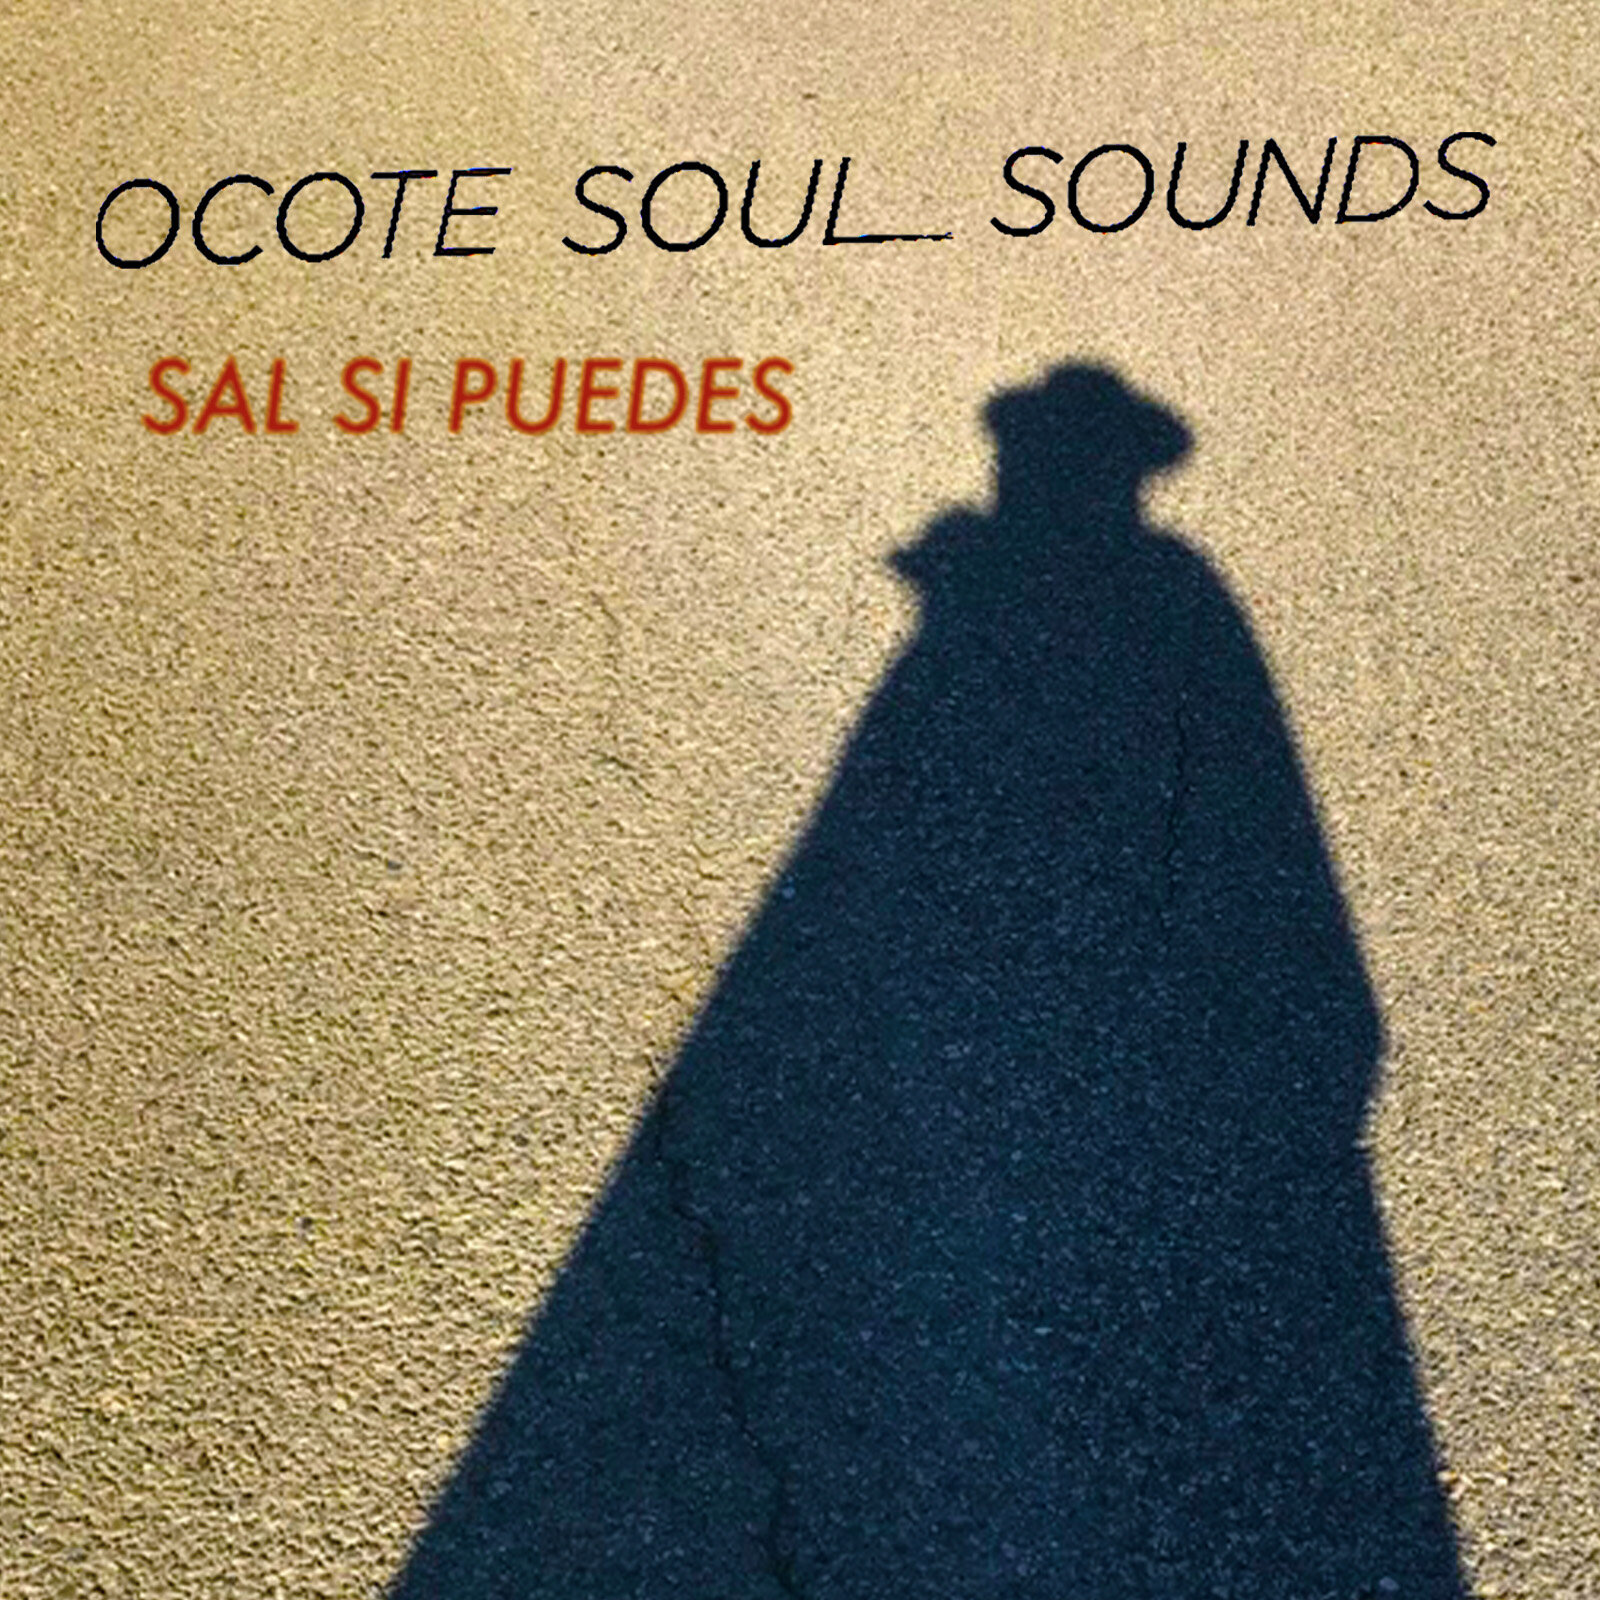 Ocote Soul Sounds "Sal Si Puedes" (2021)